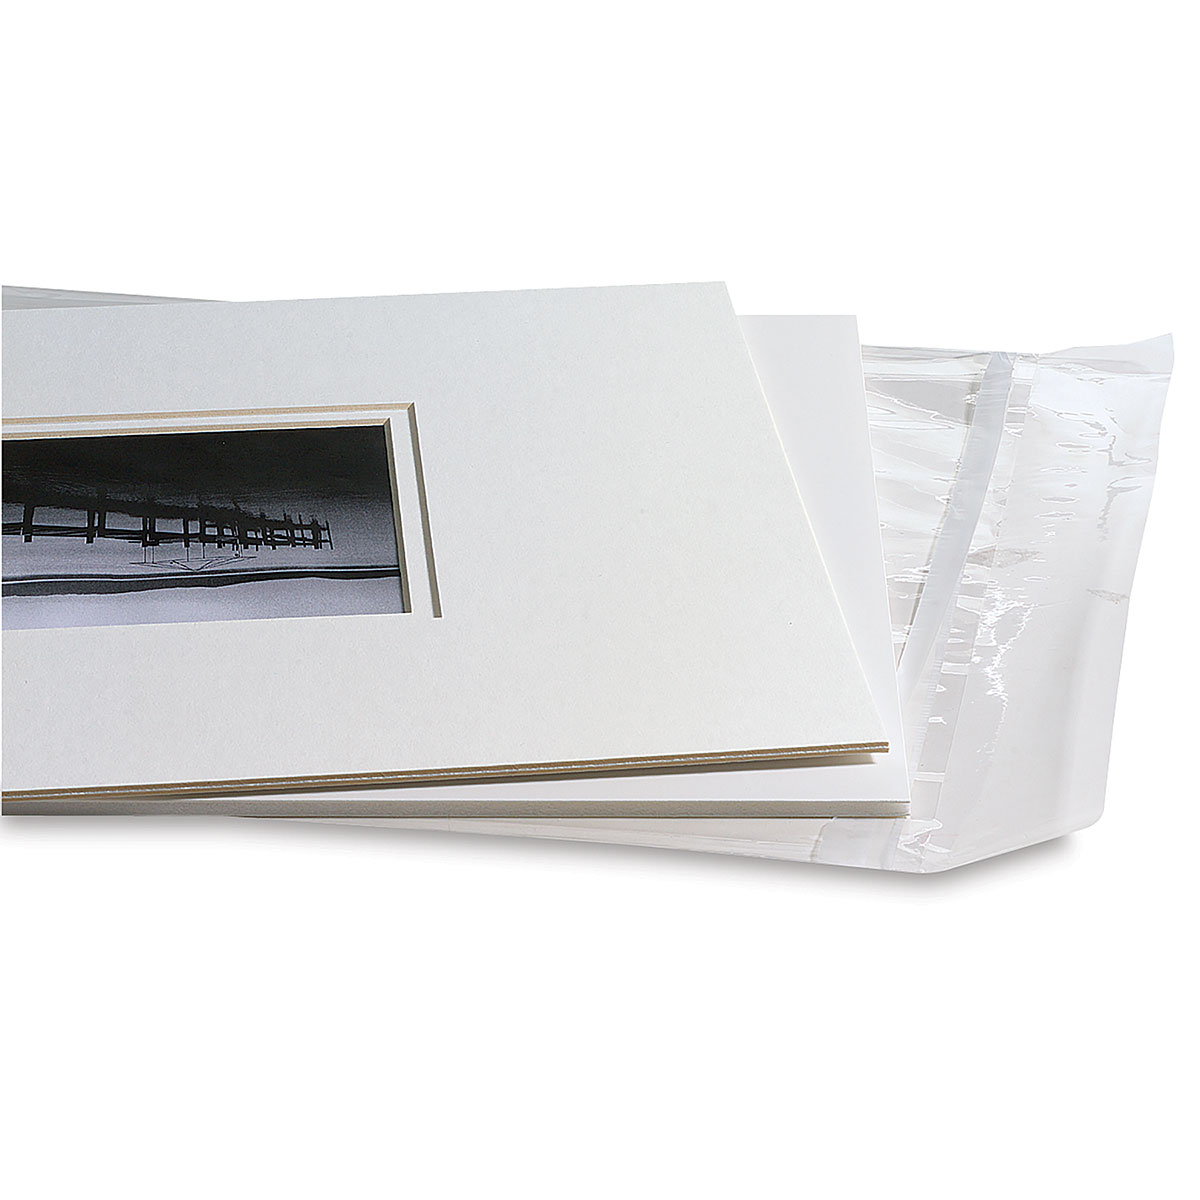 24x300 acid free archival glassine paper rolls, interleaf paper rolls, Glassine Interleaving Paper